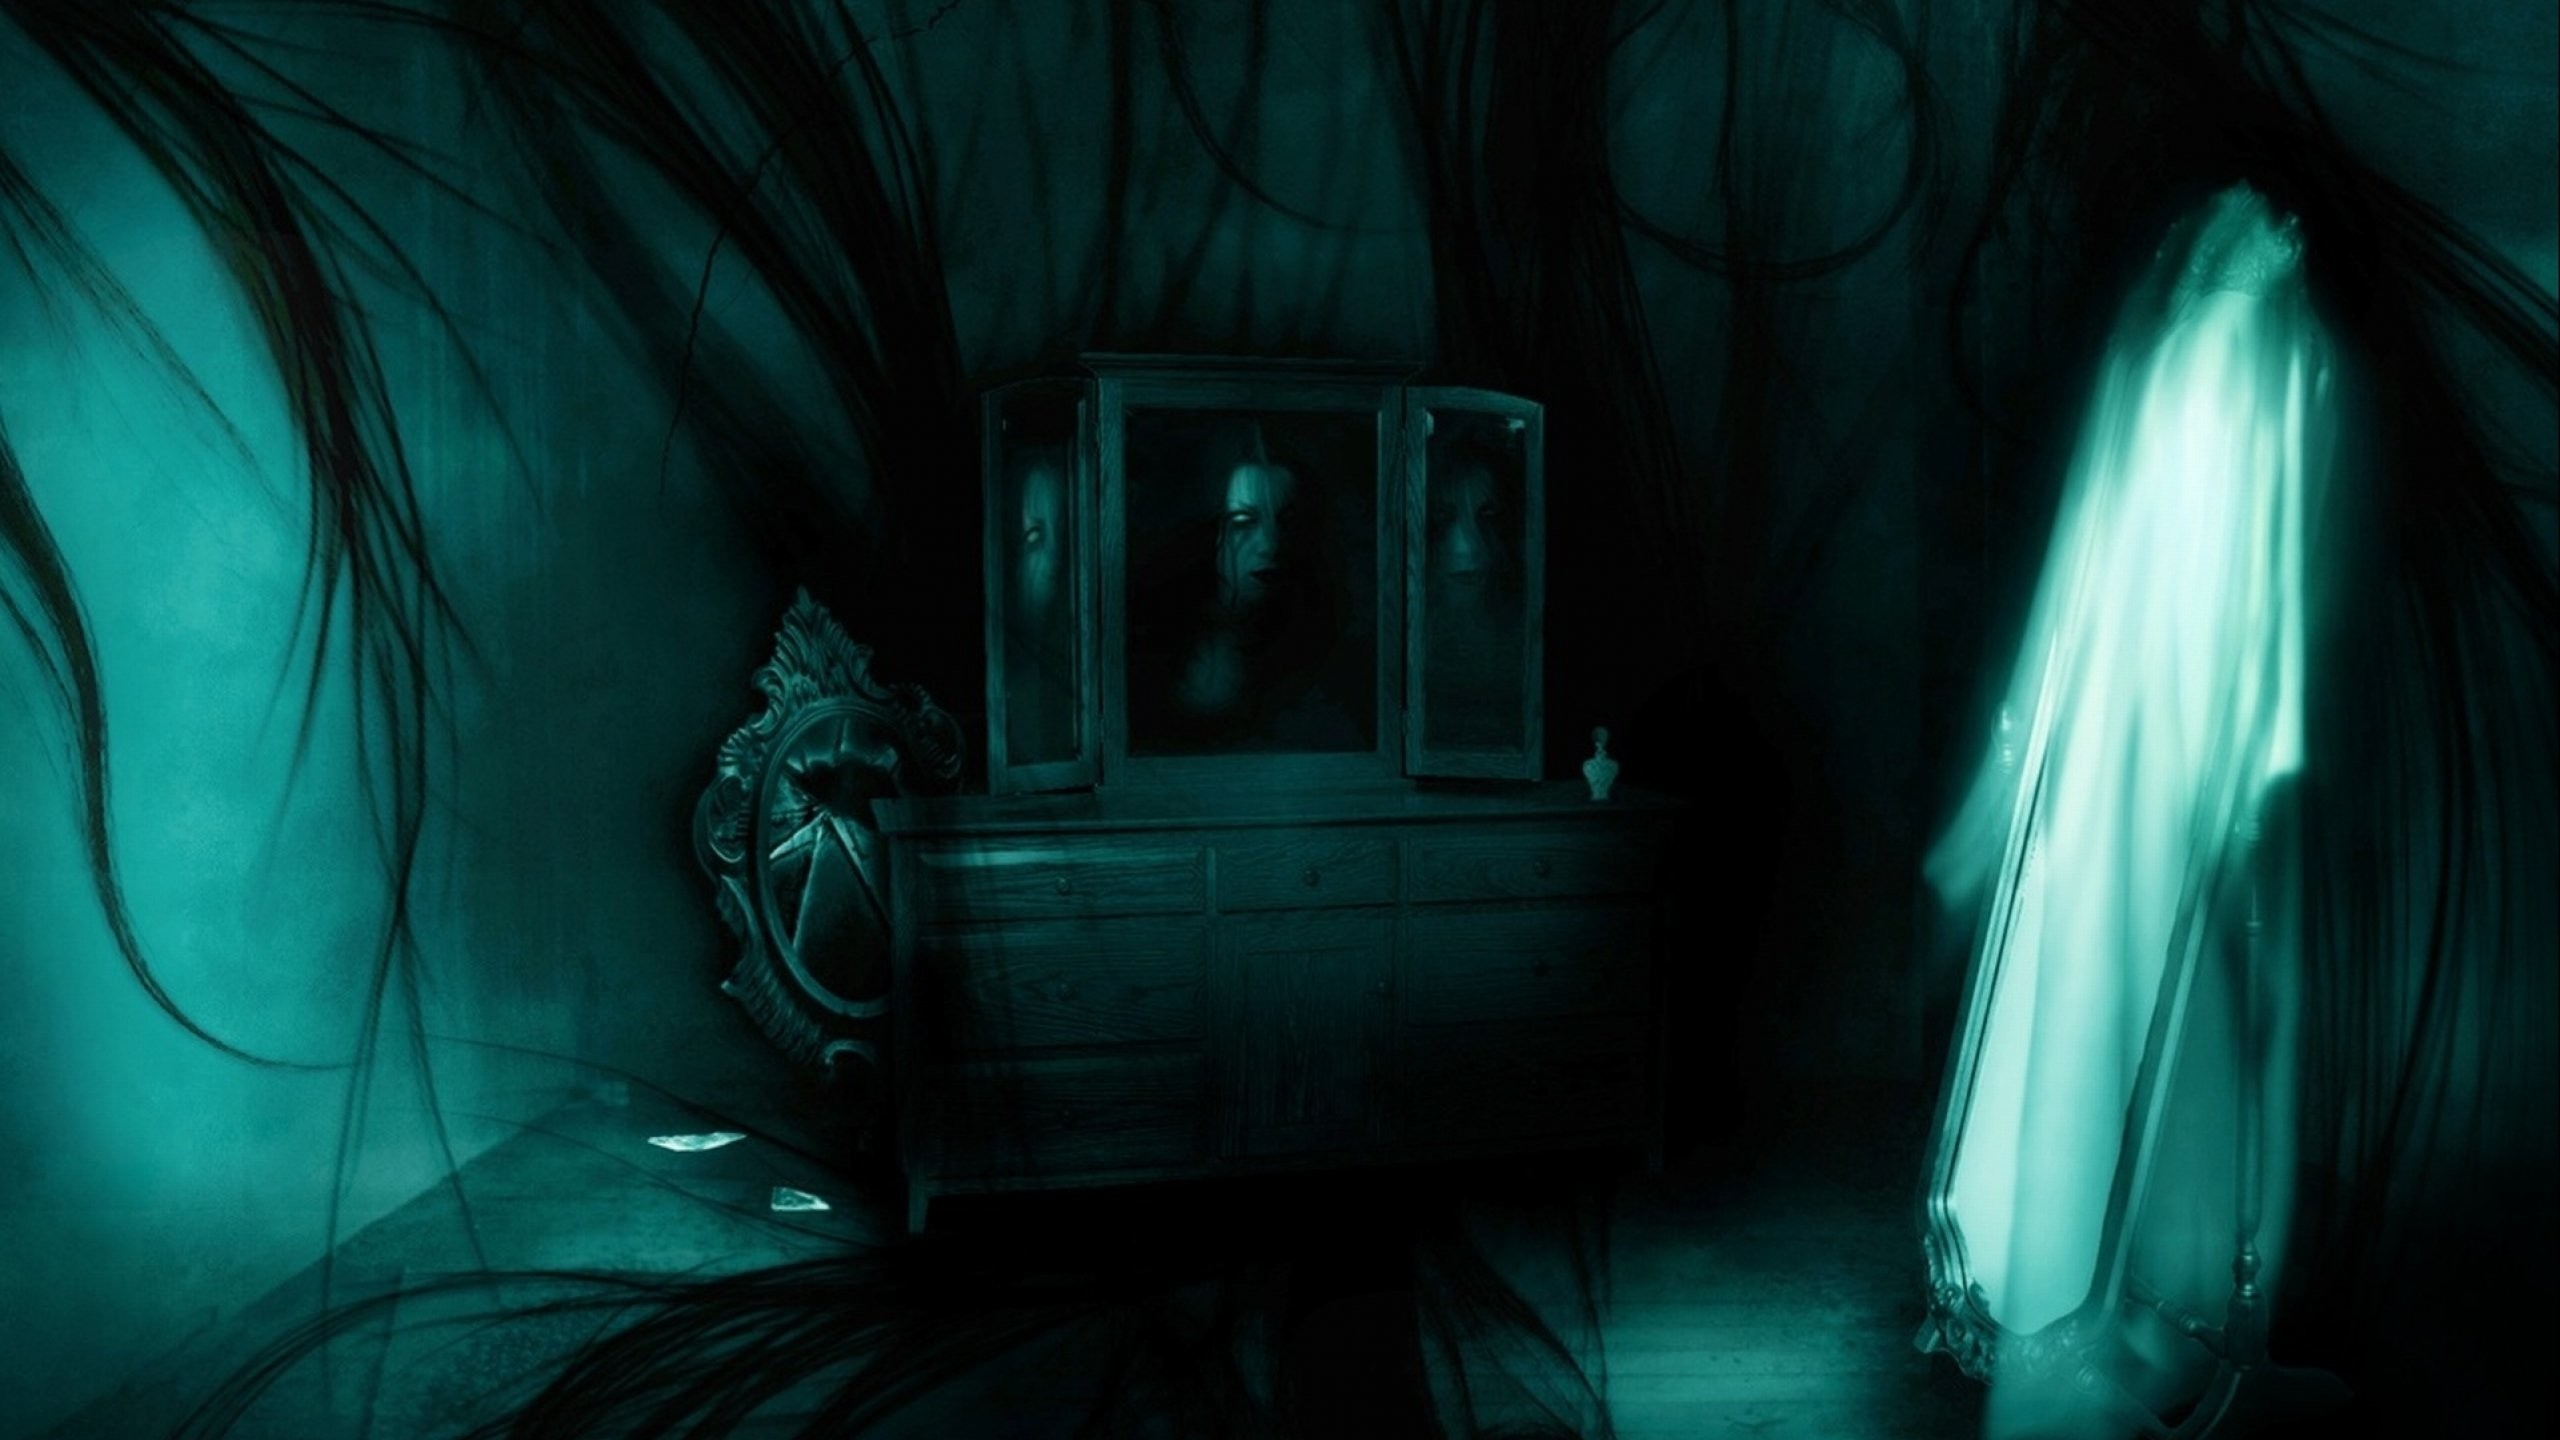 2560x1440  dark-ghost-fantasy-art-artwork-horror-spooky-creepy-halloween-gothic-  wallpaper-1.jpg (2560Ã—1440) | cool stuff | Pinterest | Creepy ghost, ...